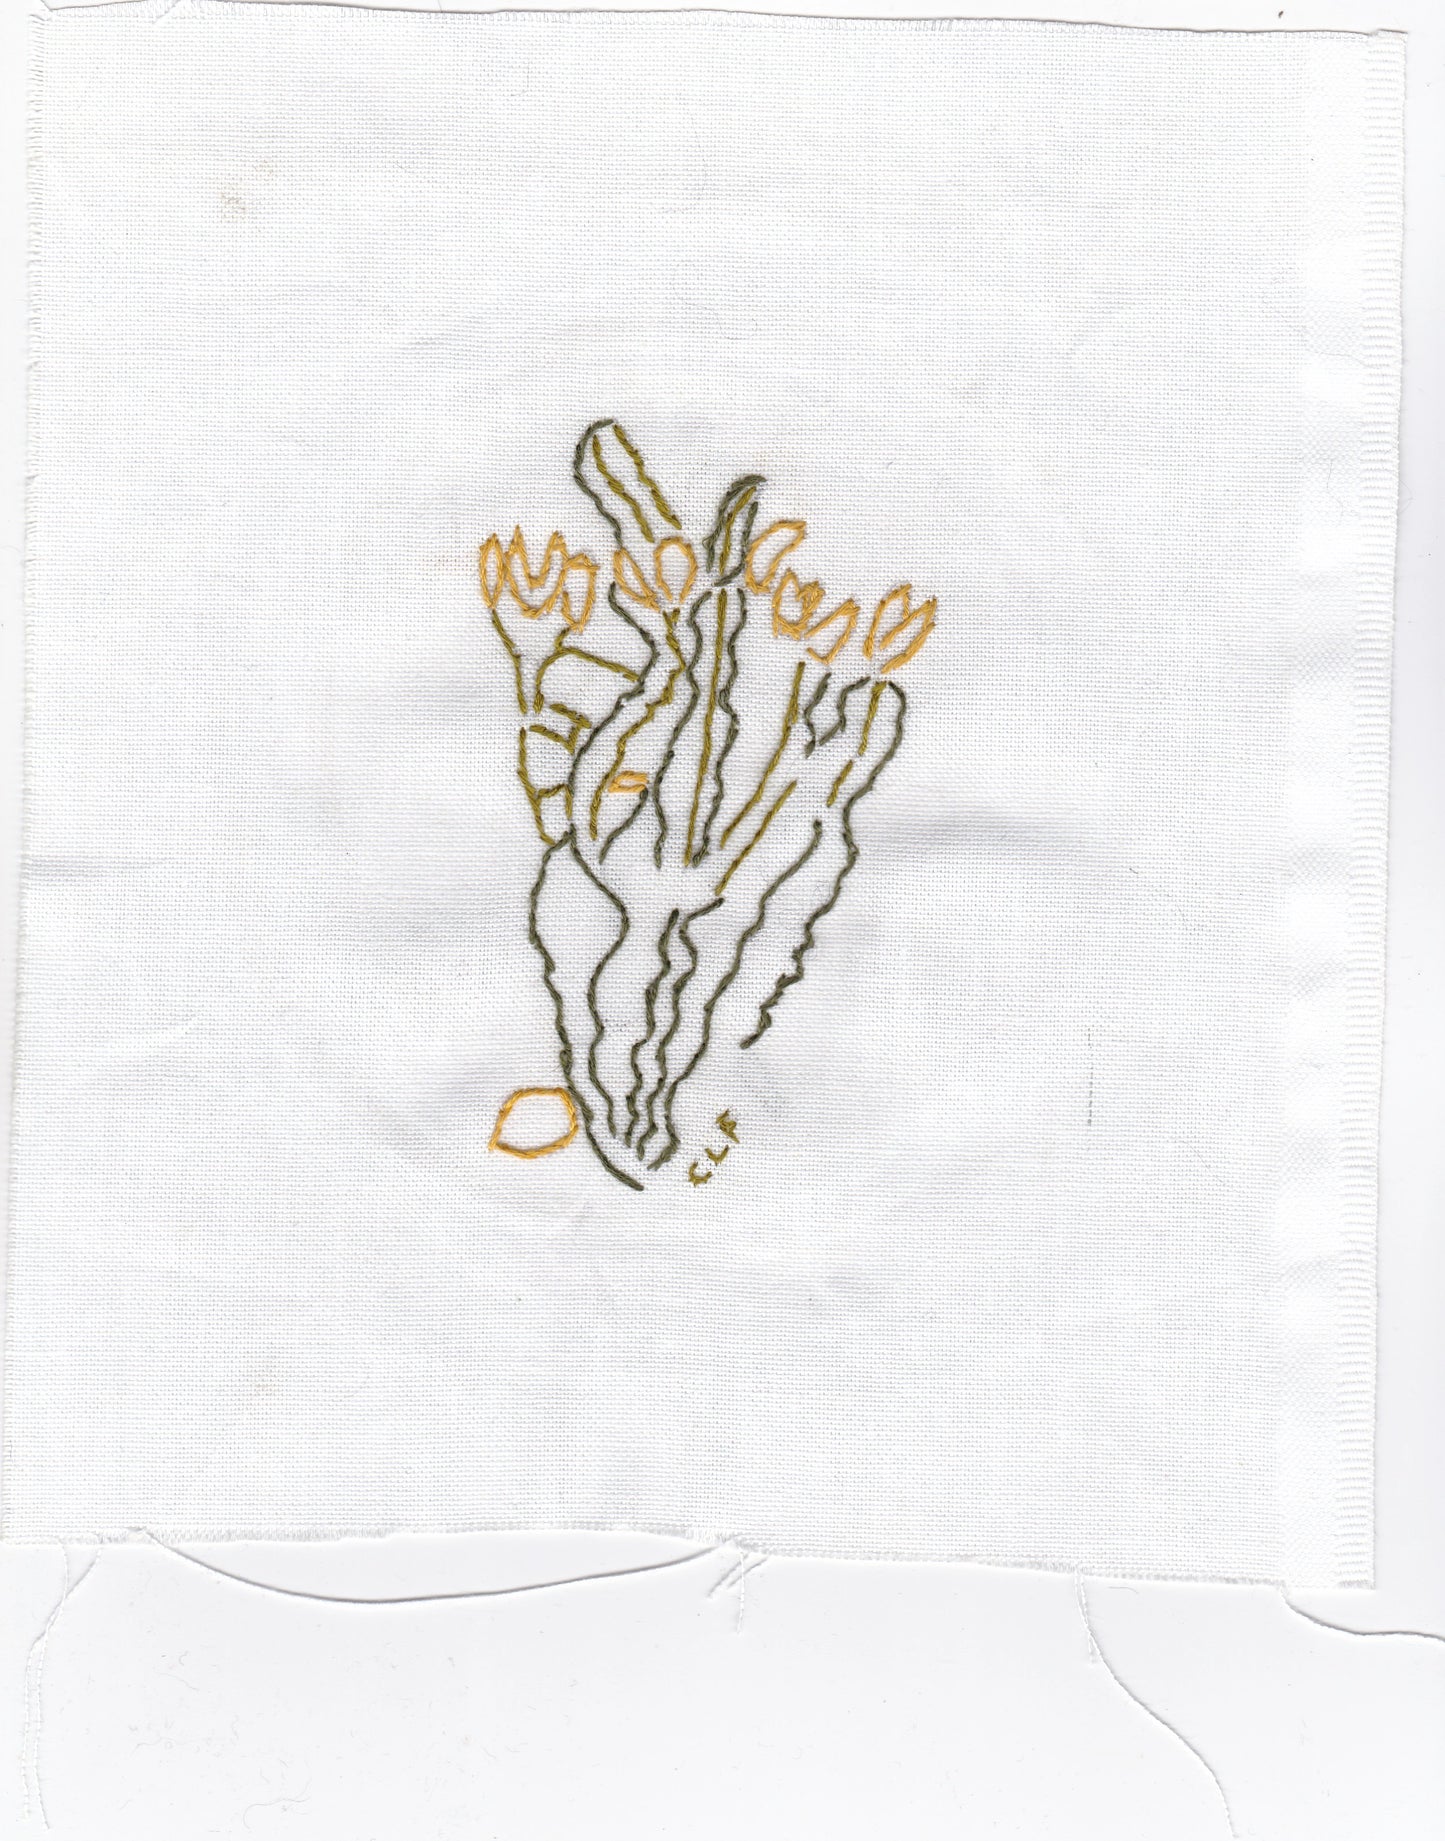 Seaweed 1 - Original textile work